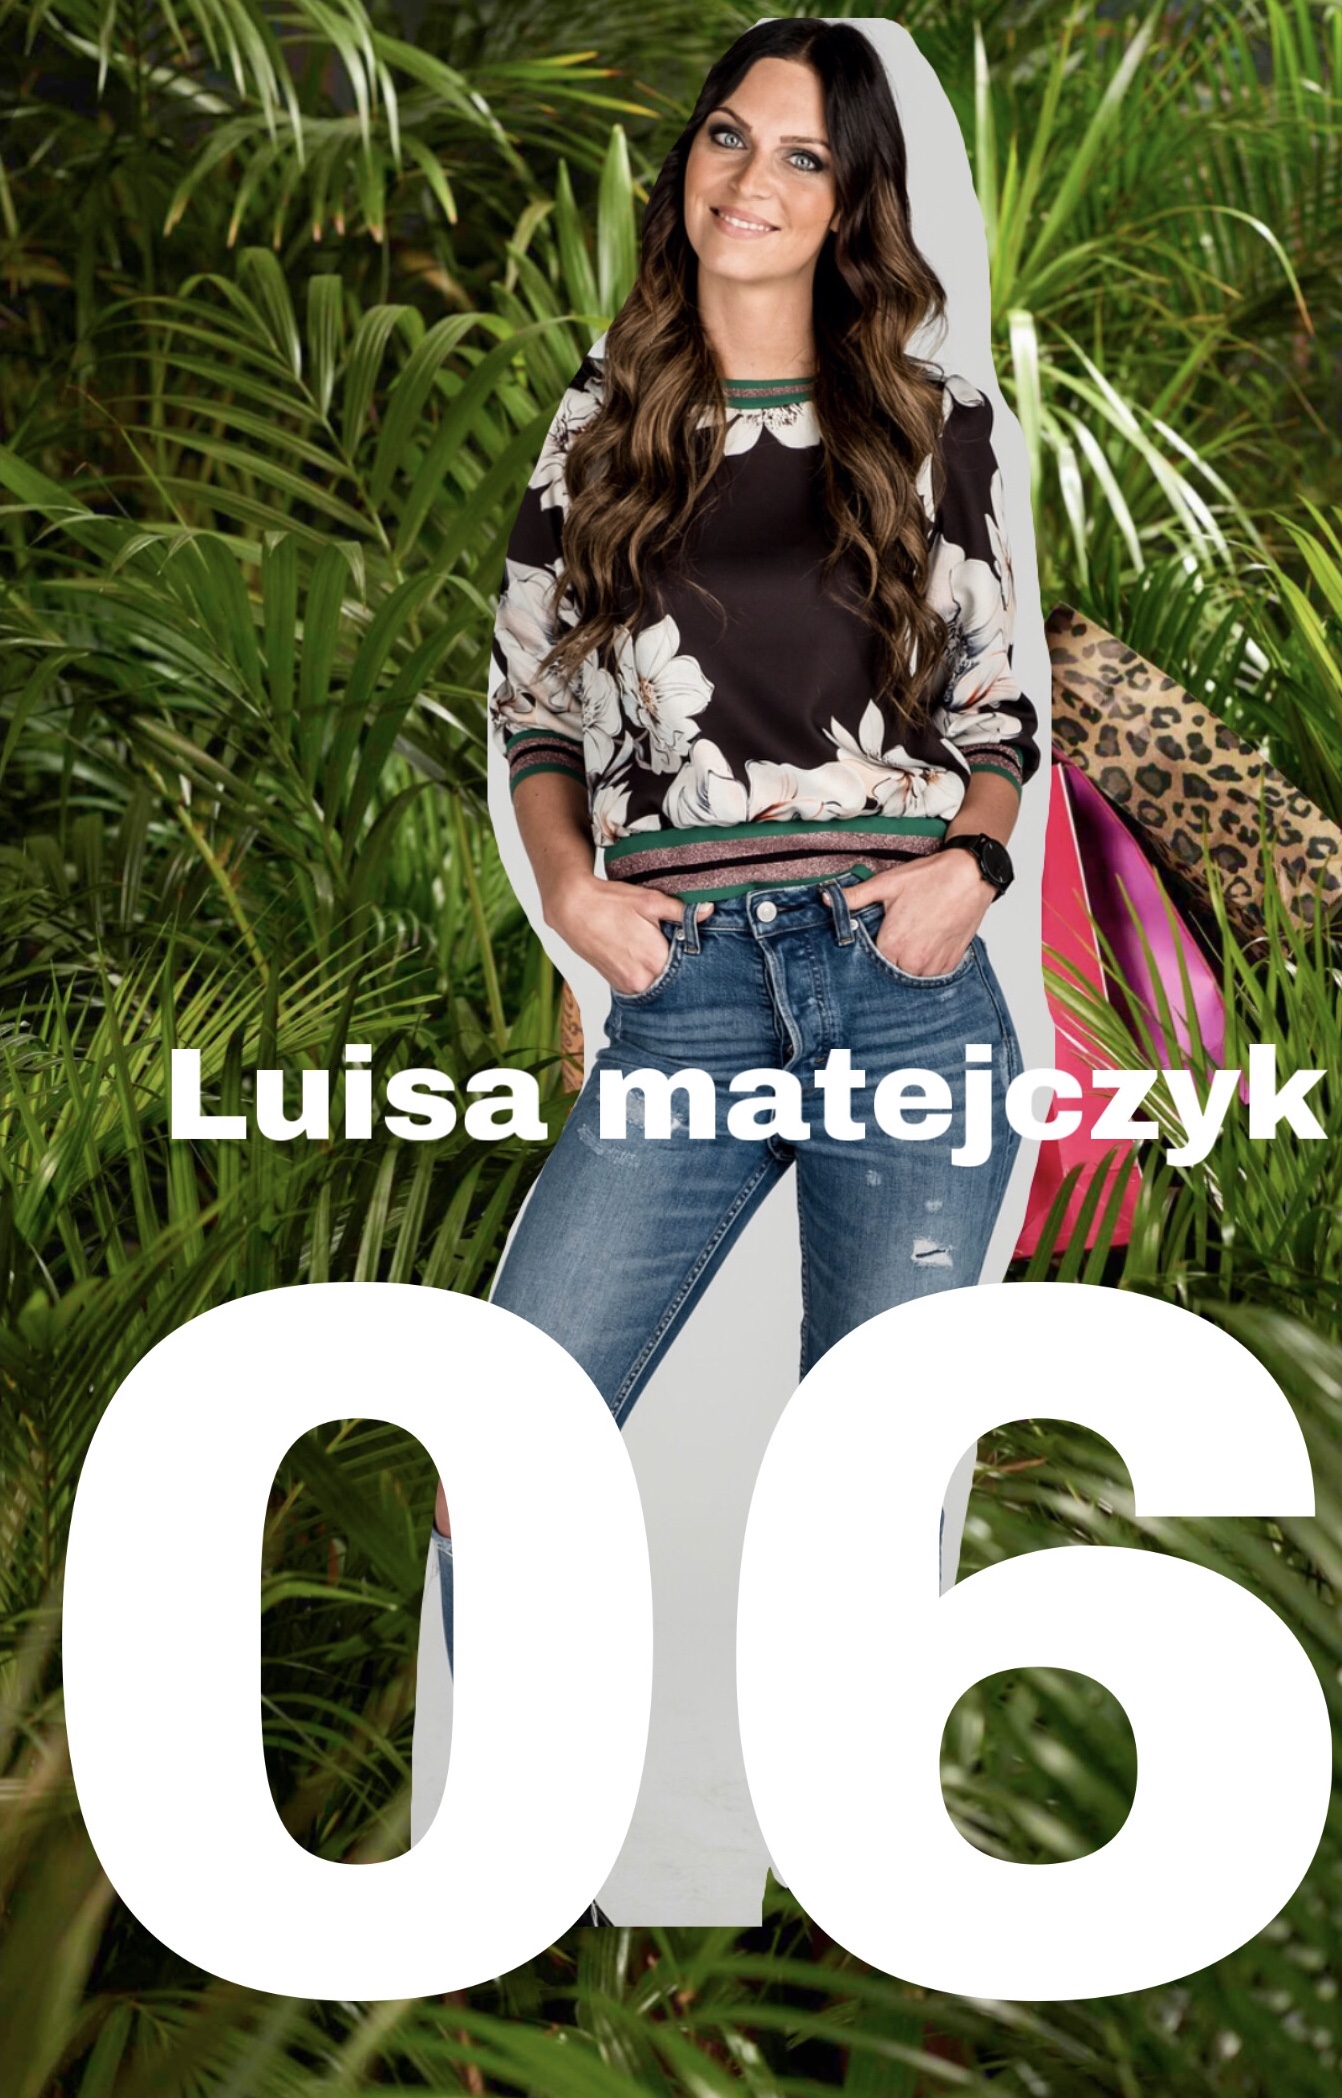 06. Luisa Matejczyk